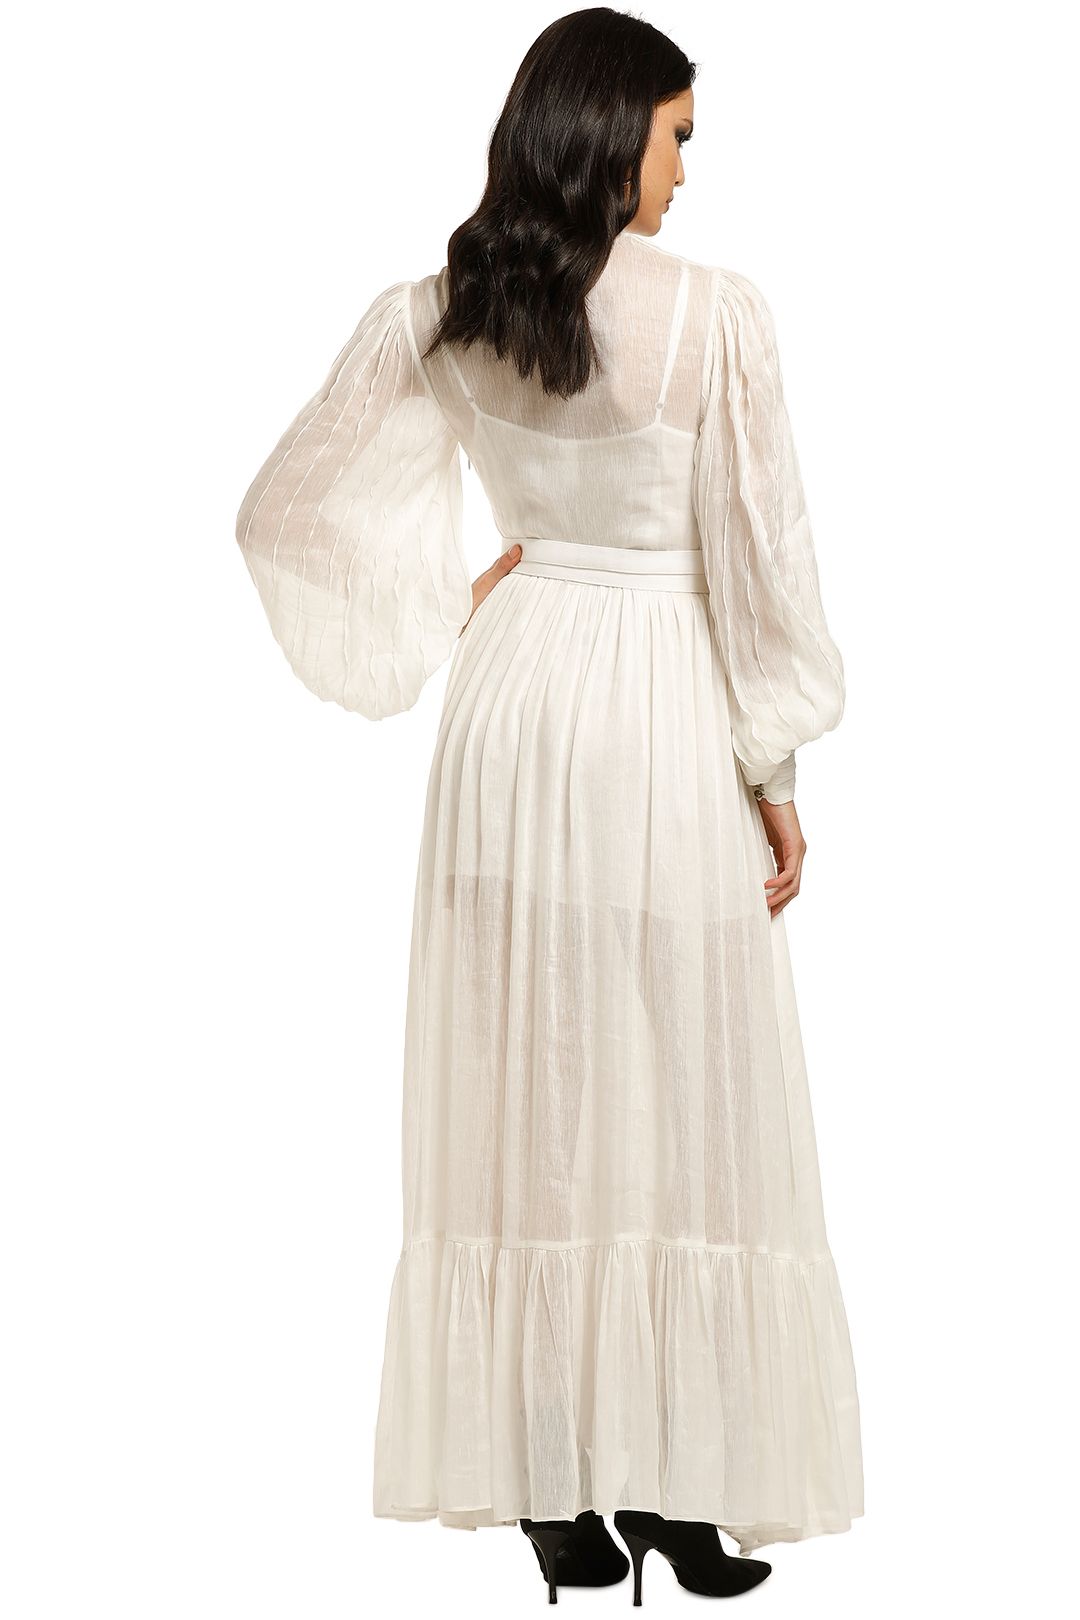 Serenity Linen Dress by LEO LIN for Hire | GlamCorner